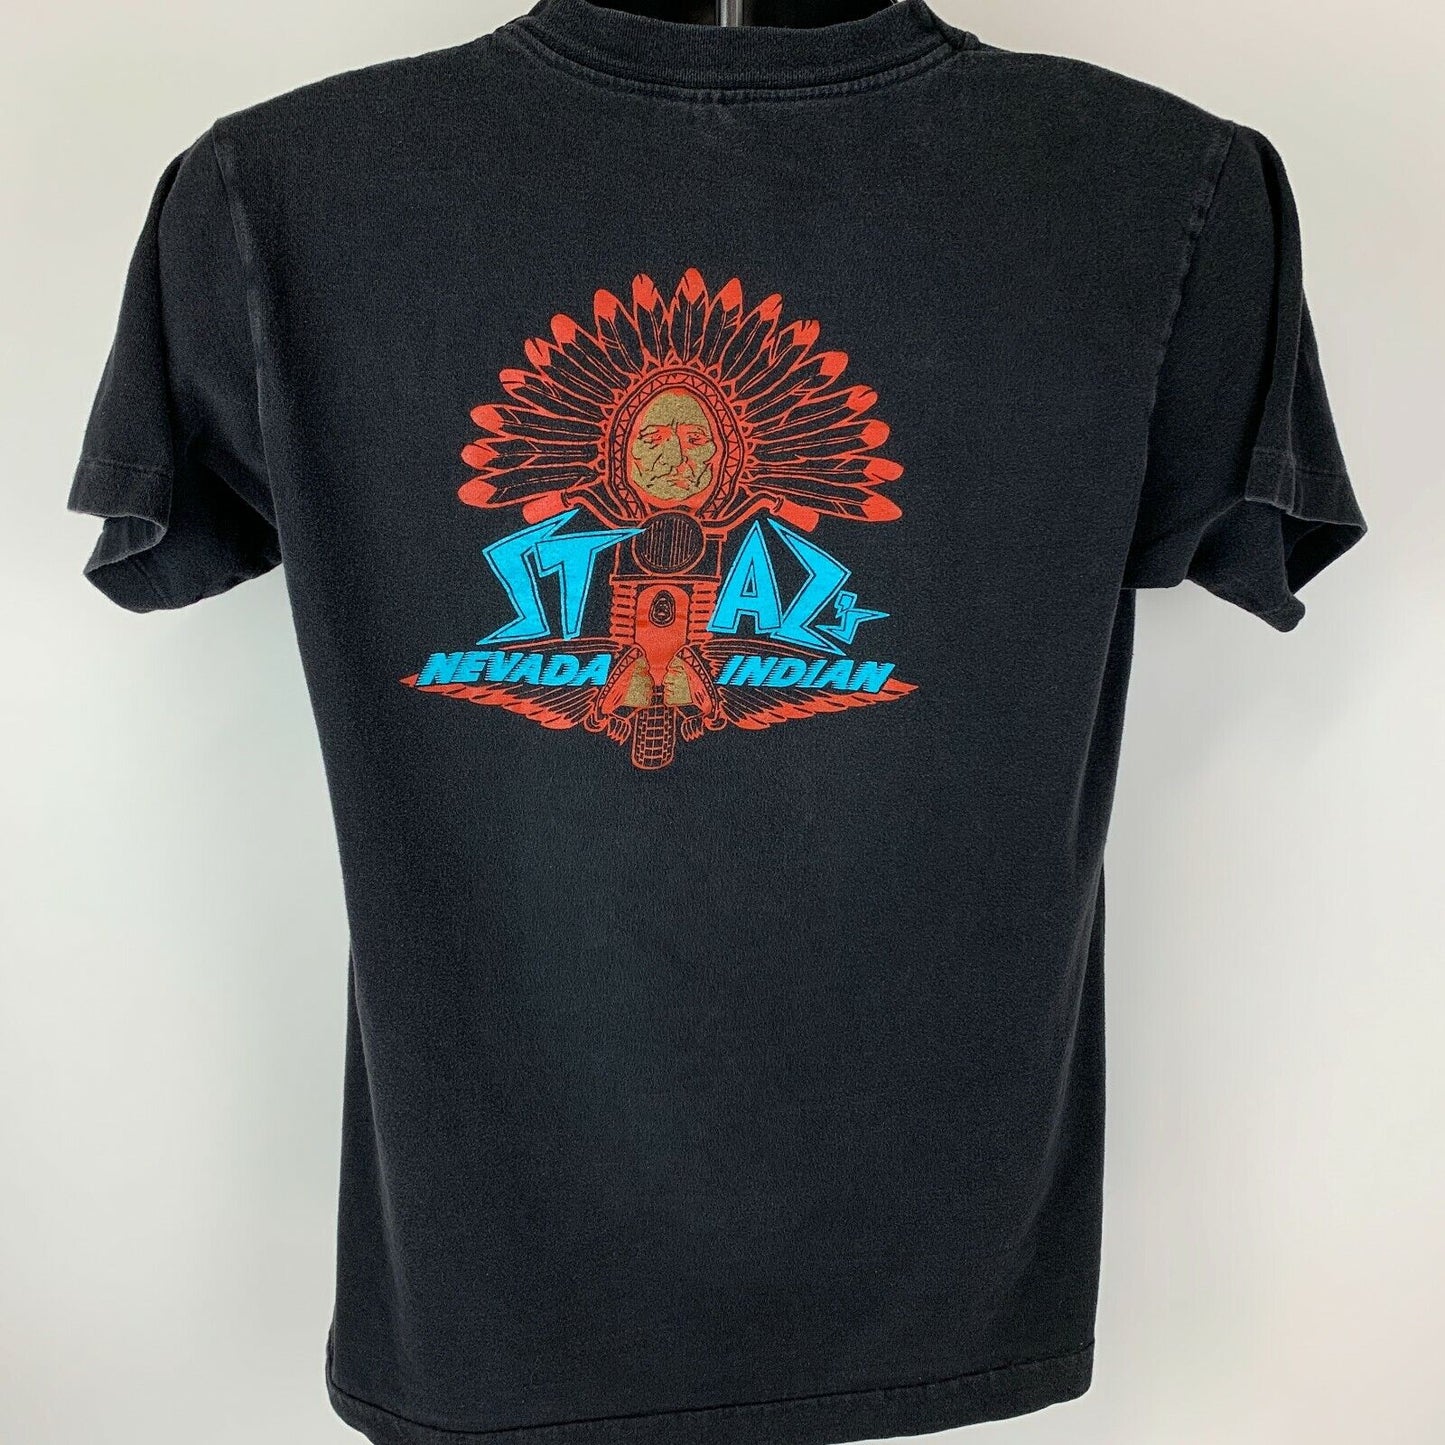 Stazs Nevada Indian Vintage 90s T Shirt Medium Motorcycles Biker Dealer Tee